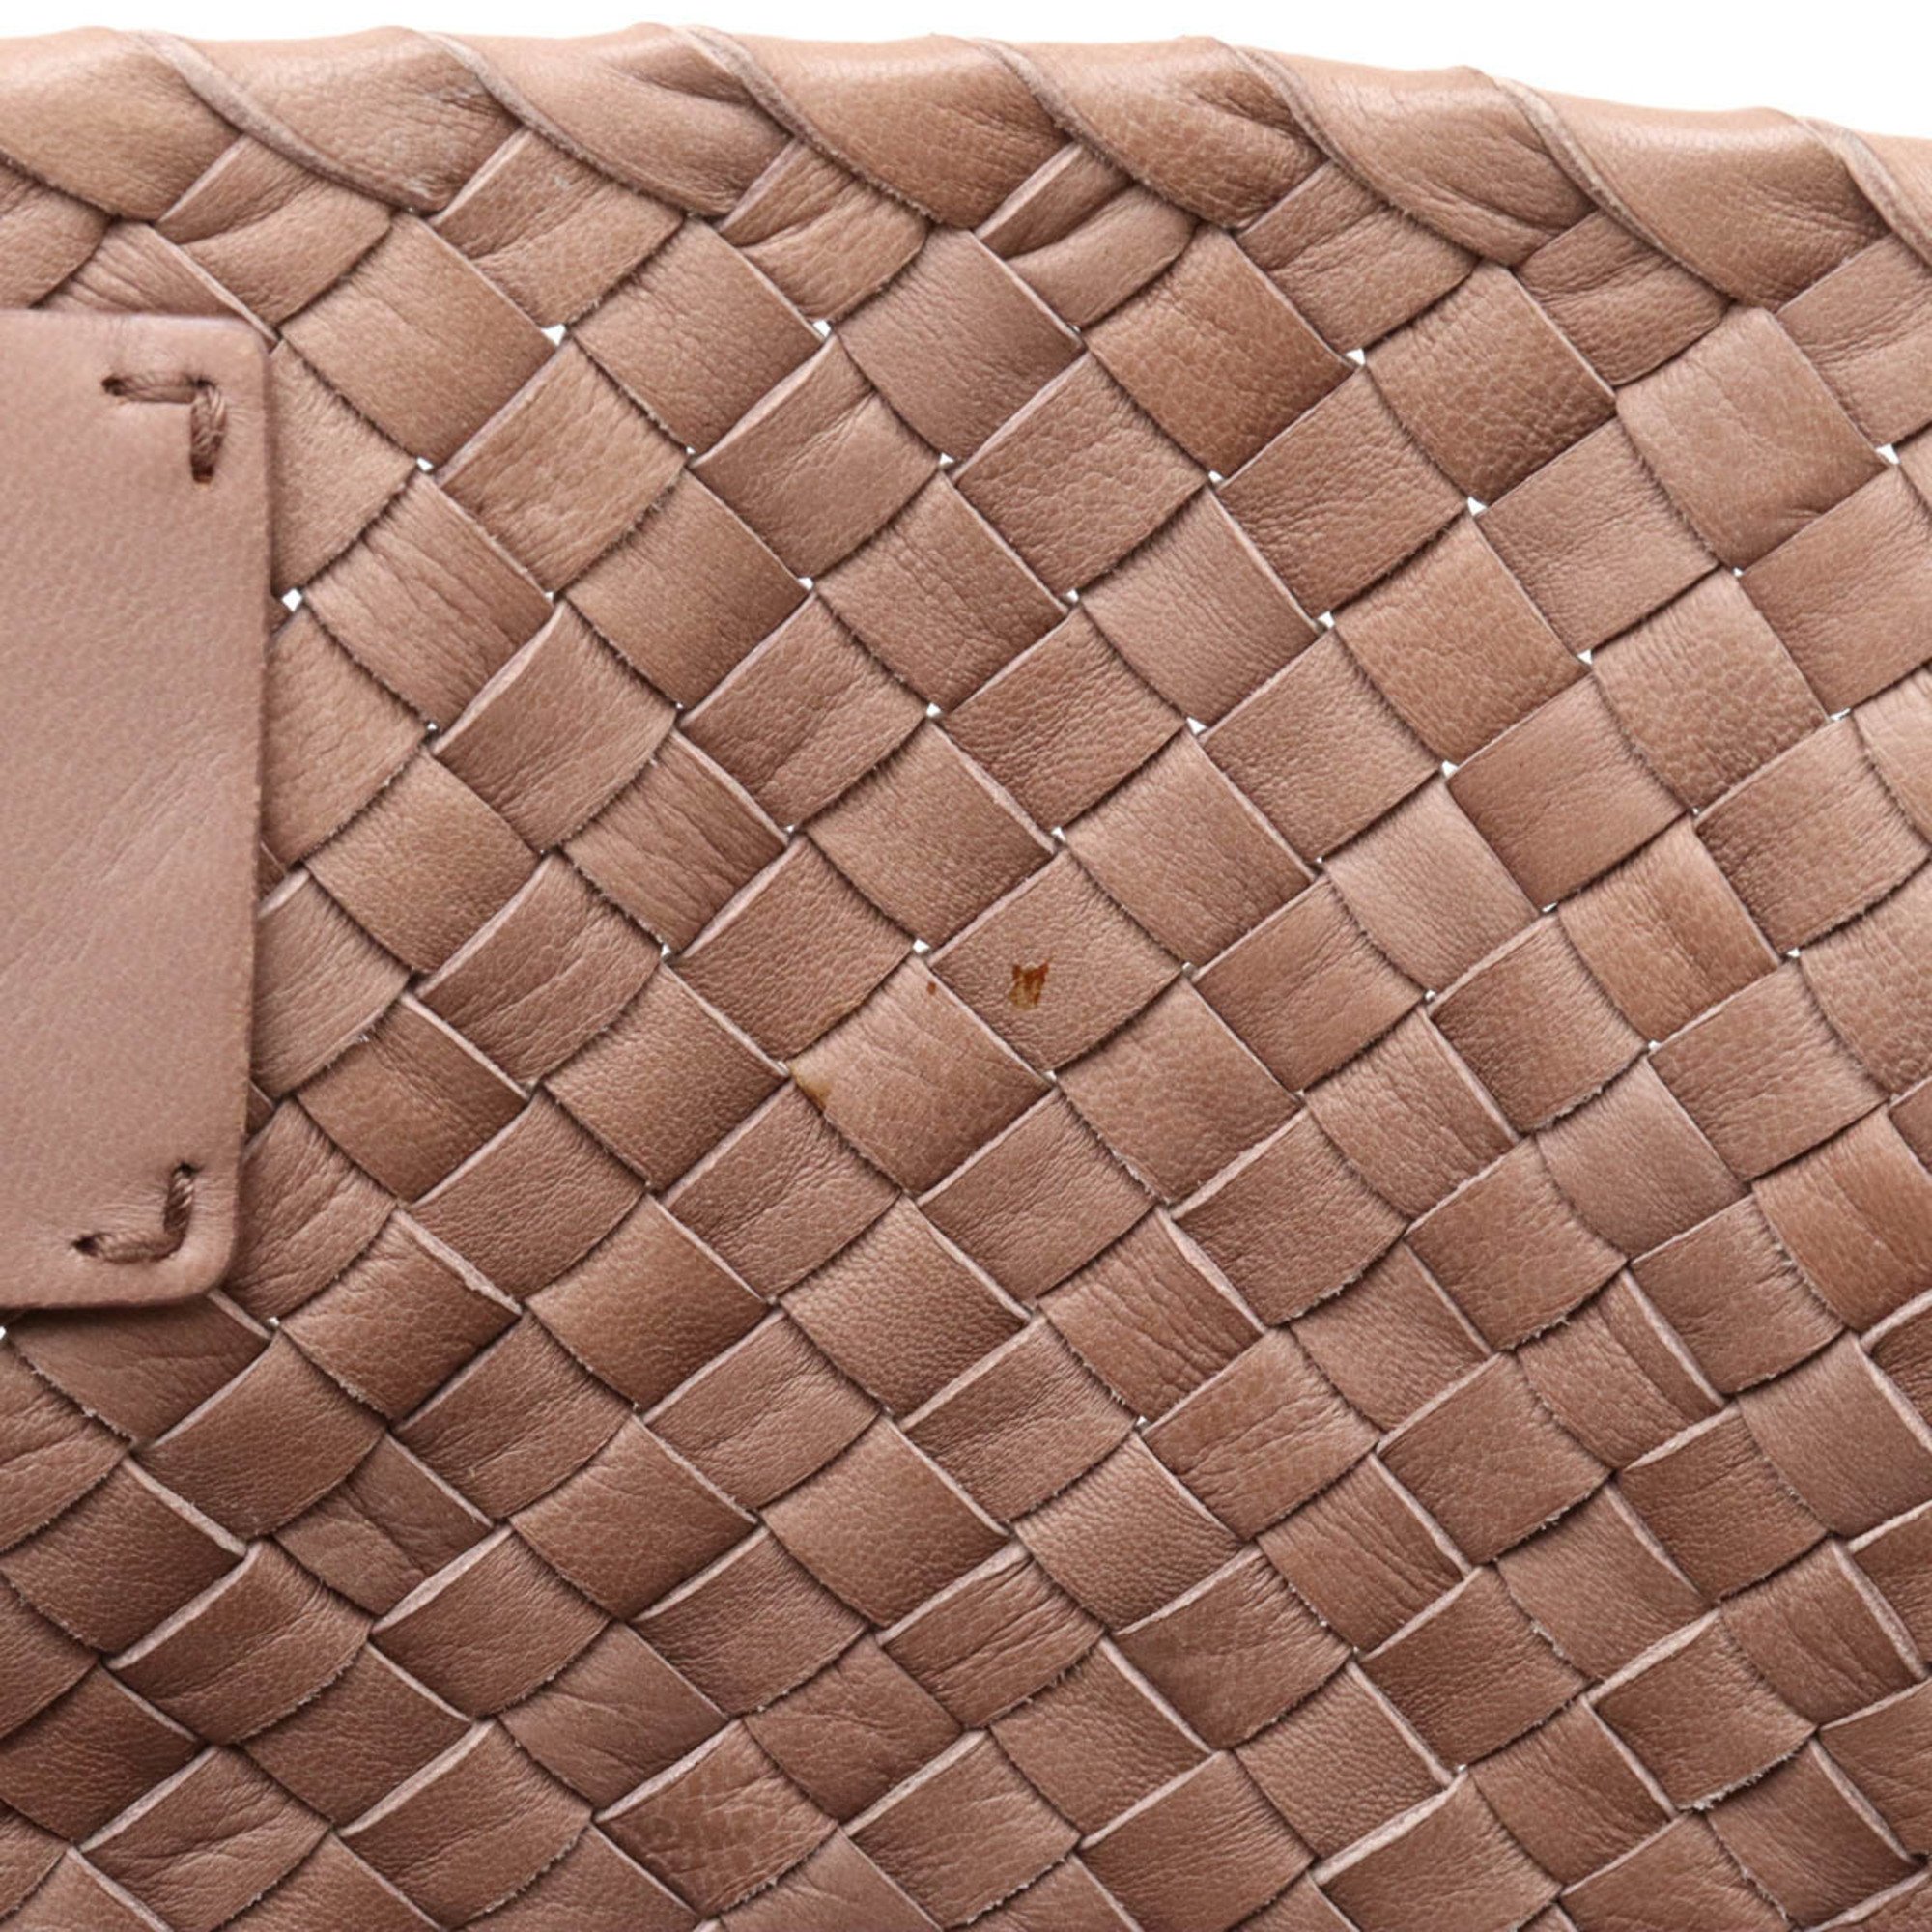 BOTTEGA VENETA Intrecciato Cabas PM Tote Bag Shoulder Leather Dusty Pink Limited to 500 pieces 141498